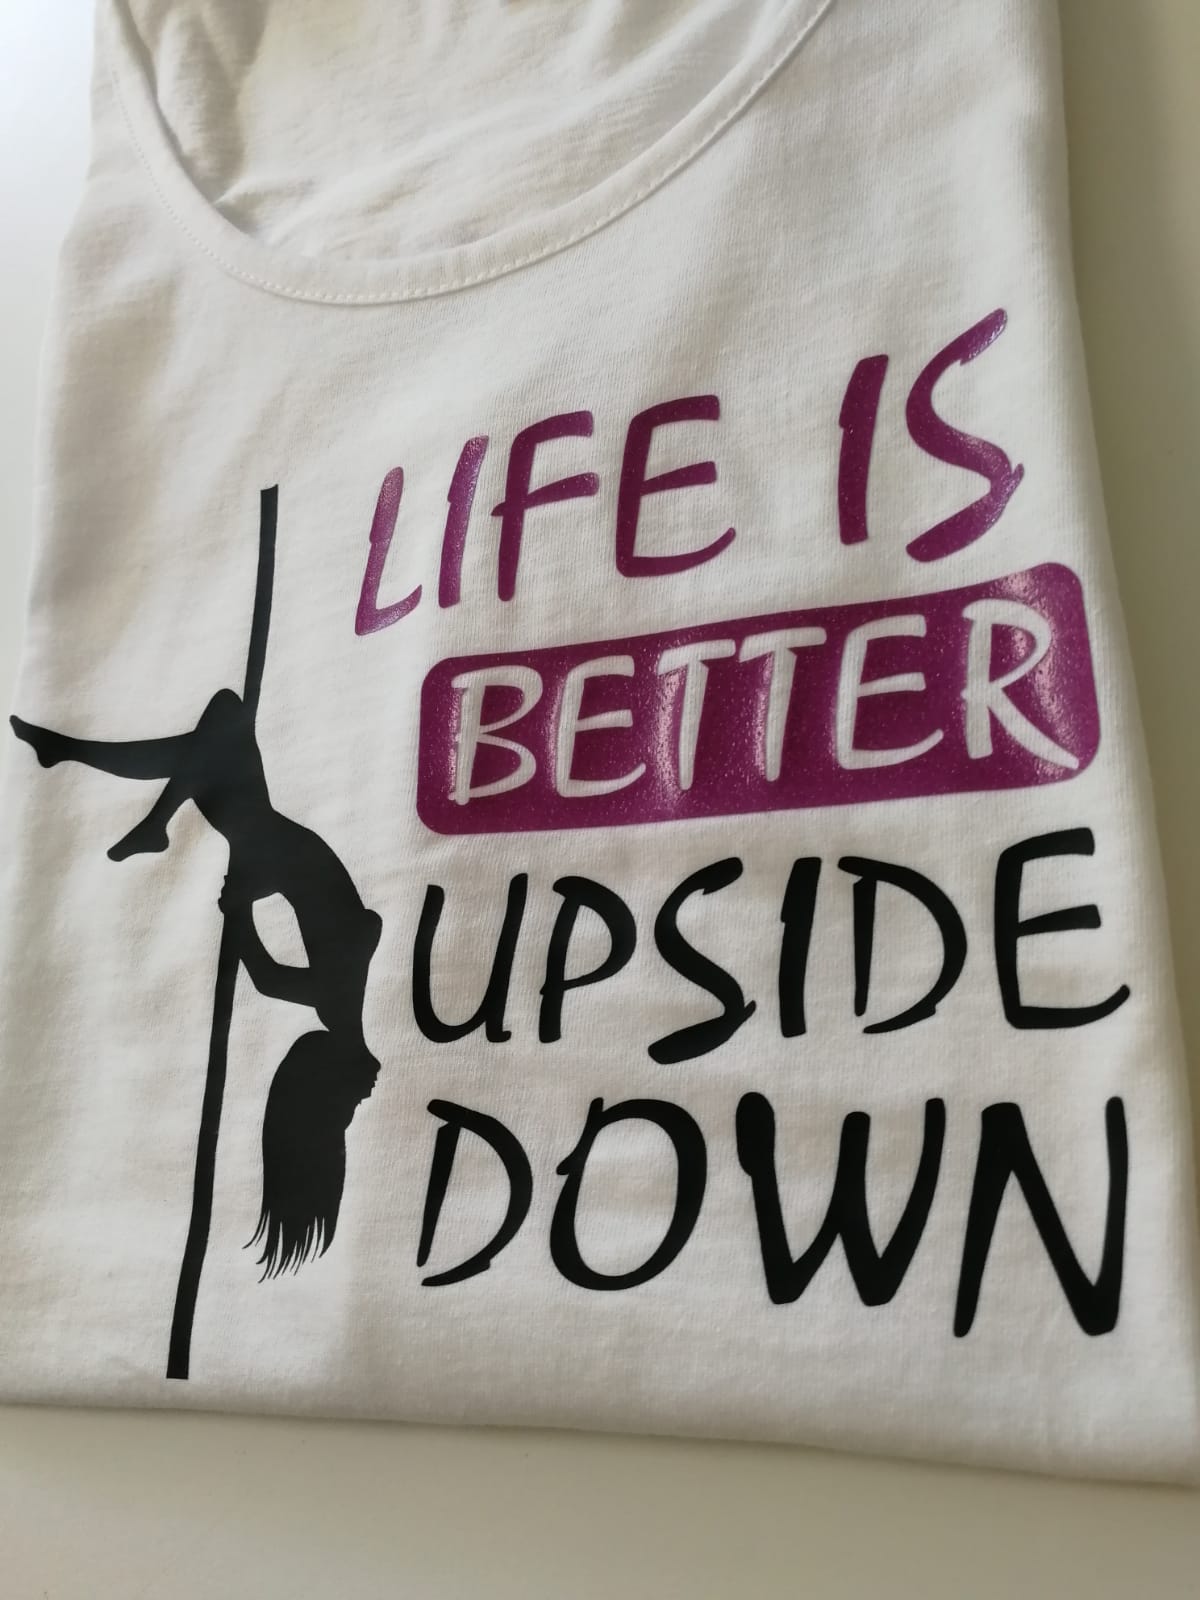 Pole Dance T-Shirt - Life is better upside down